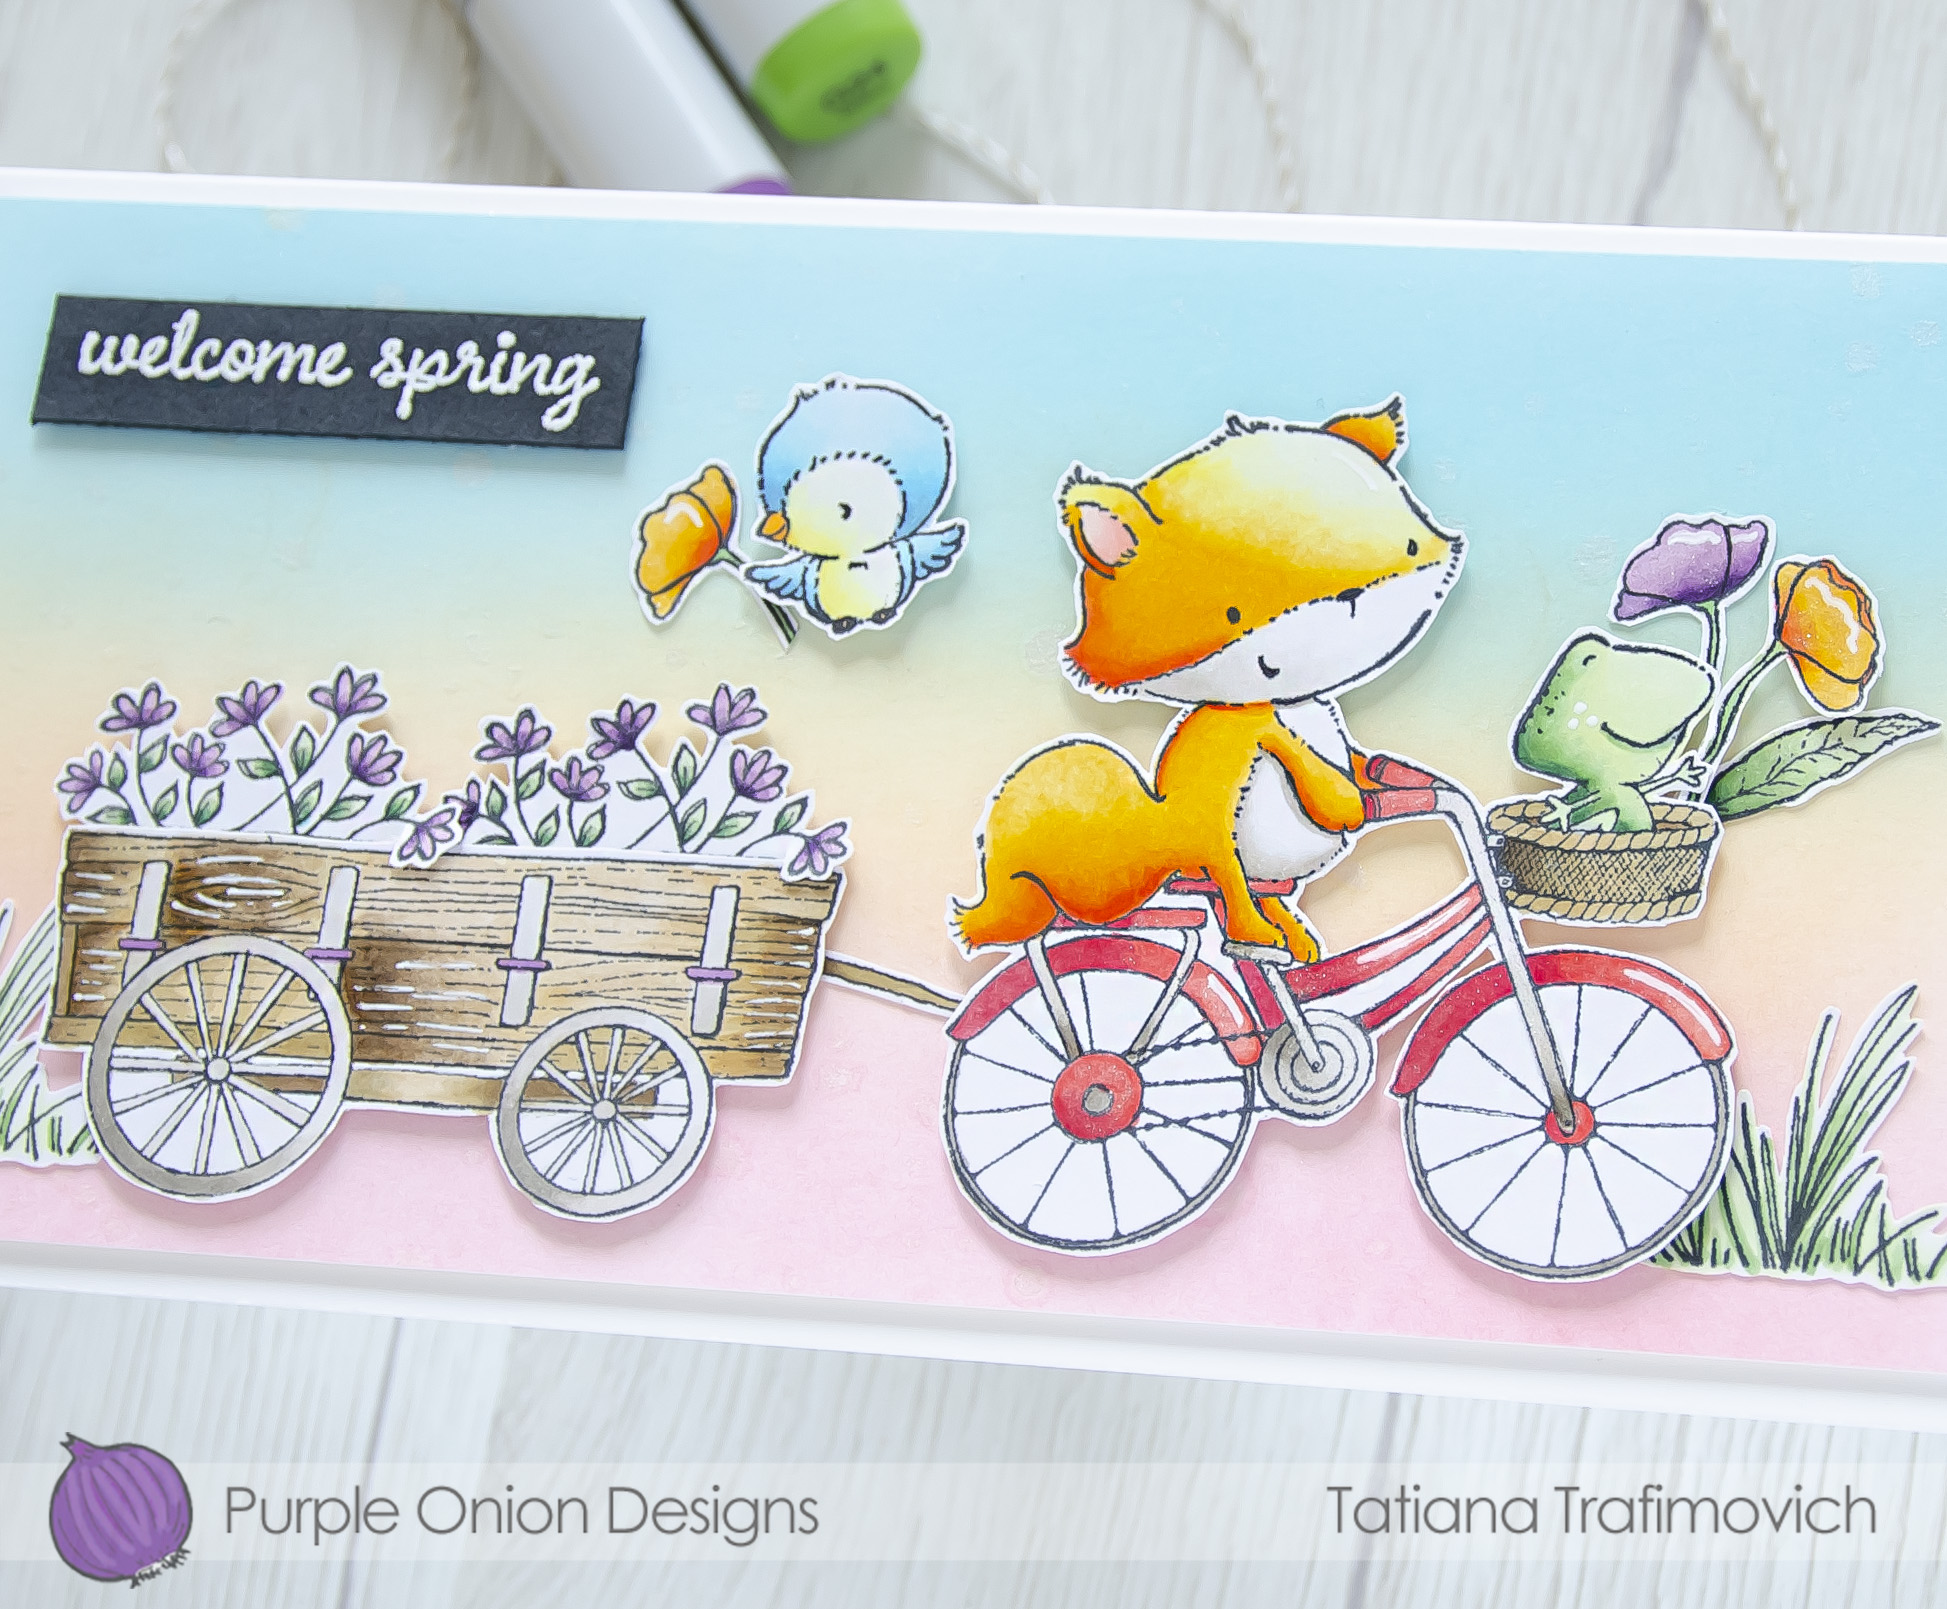 Welcome Spring #handmade card by Tatiana Trafimovich #tatianacraftandart - stamps by Purple Onion Designs